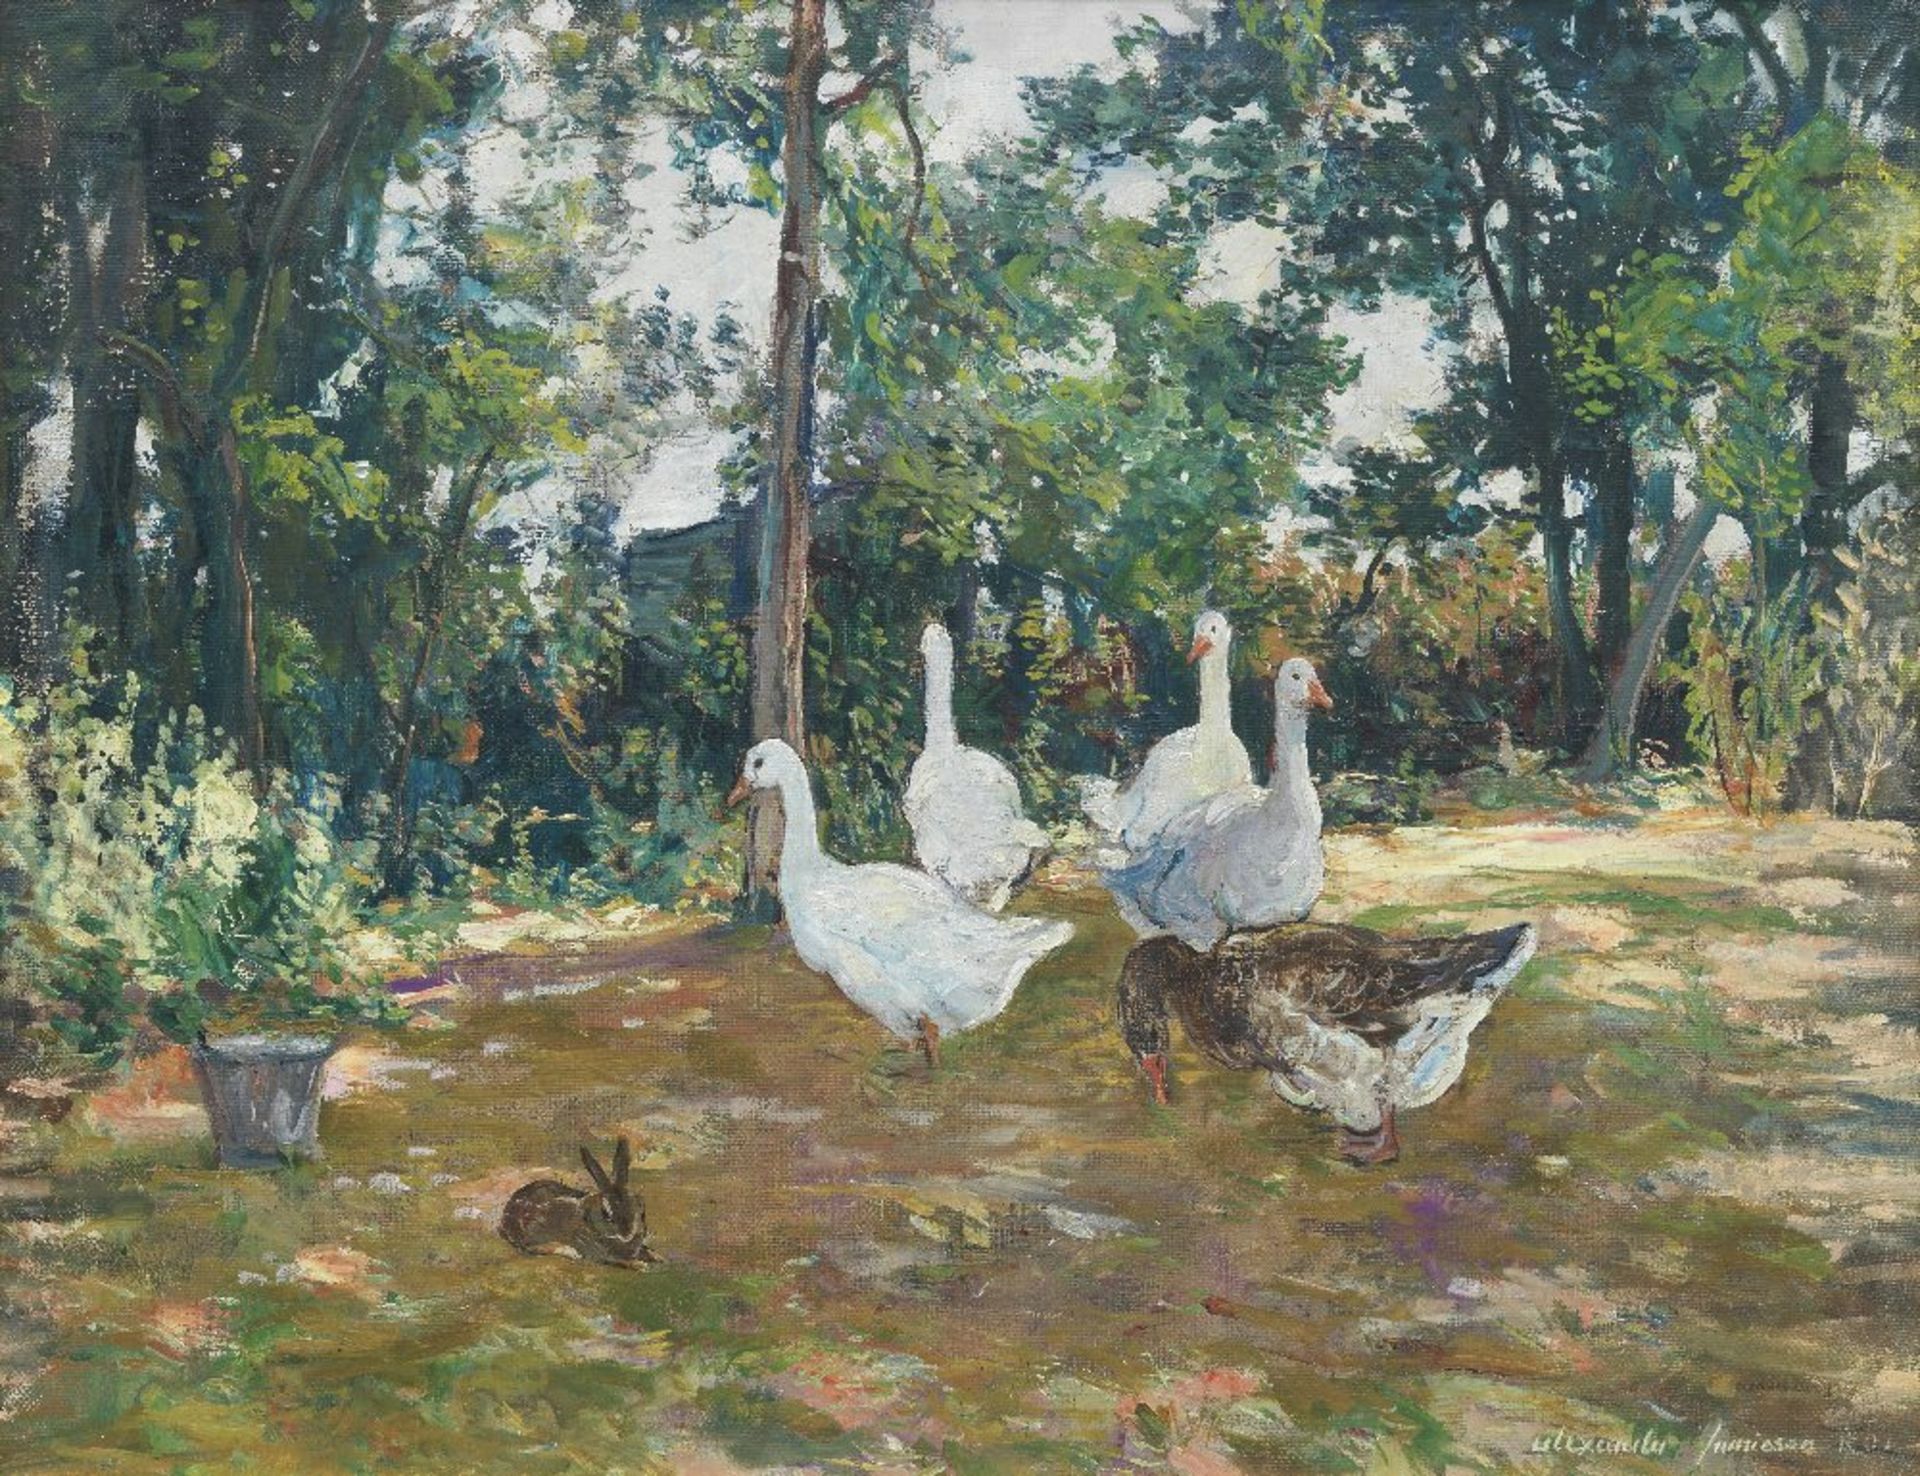 Alexander Jamieson ROI (British, 1873-1937) Geese and Rabbit in the Garden